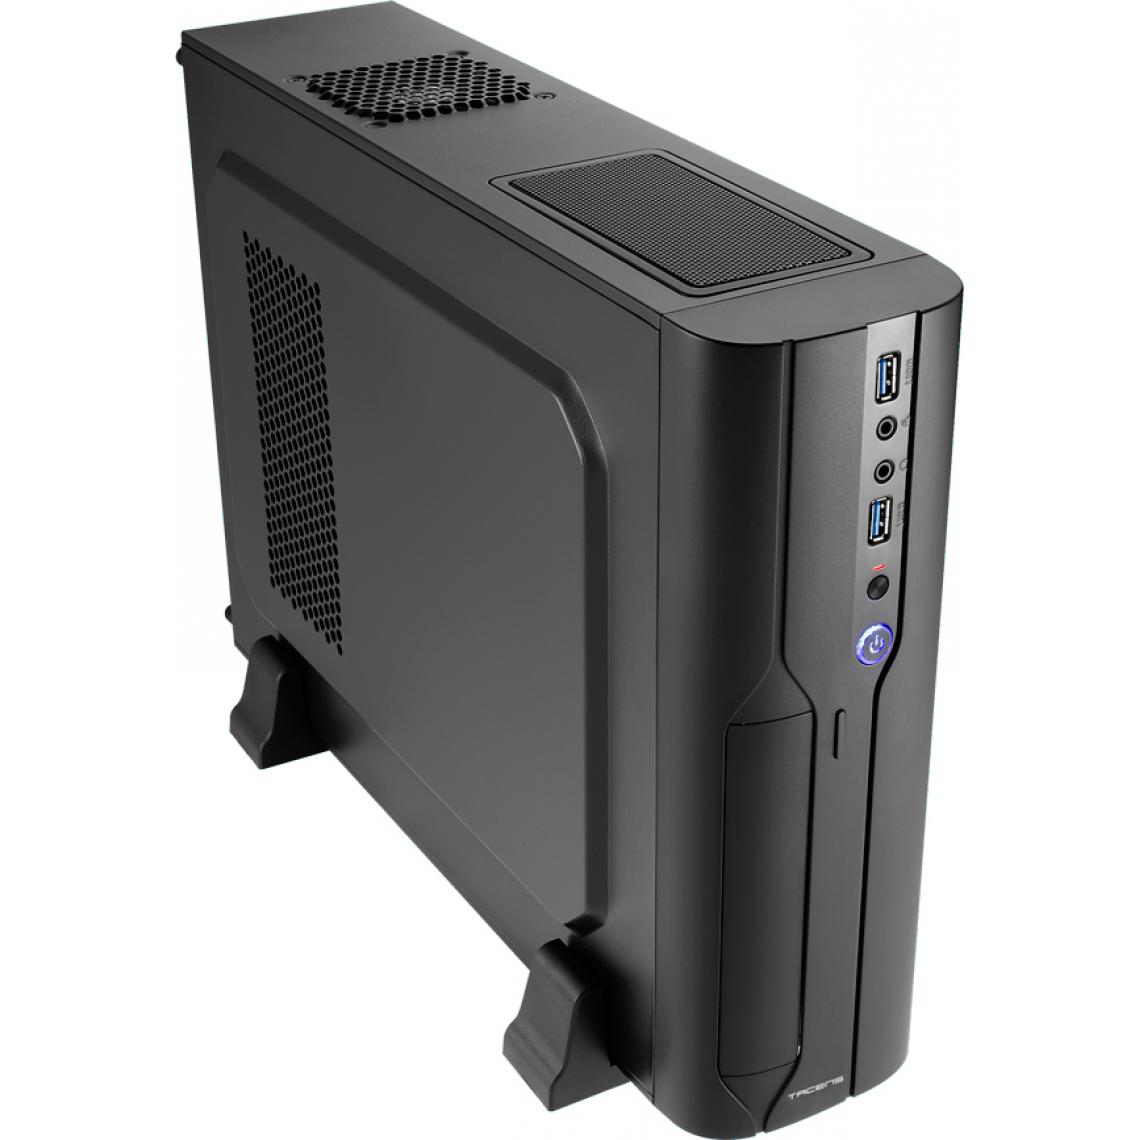 Tacens - Boitier Mini Tour Micro-ATX Orum III + Alimentation 500W (Noir) - Boitier PC